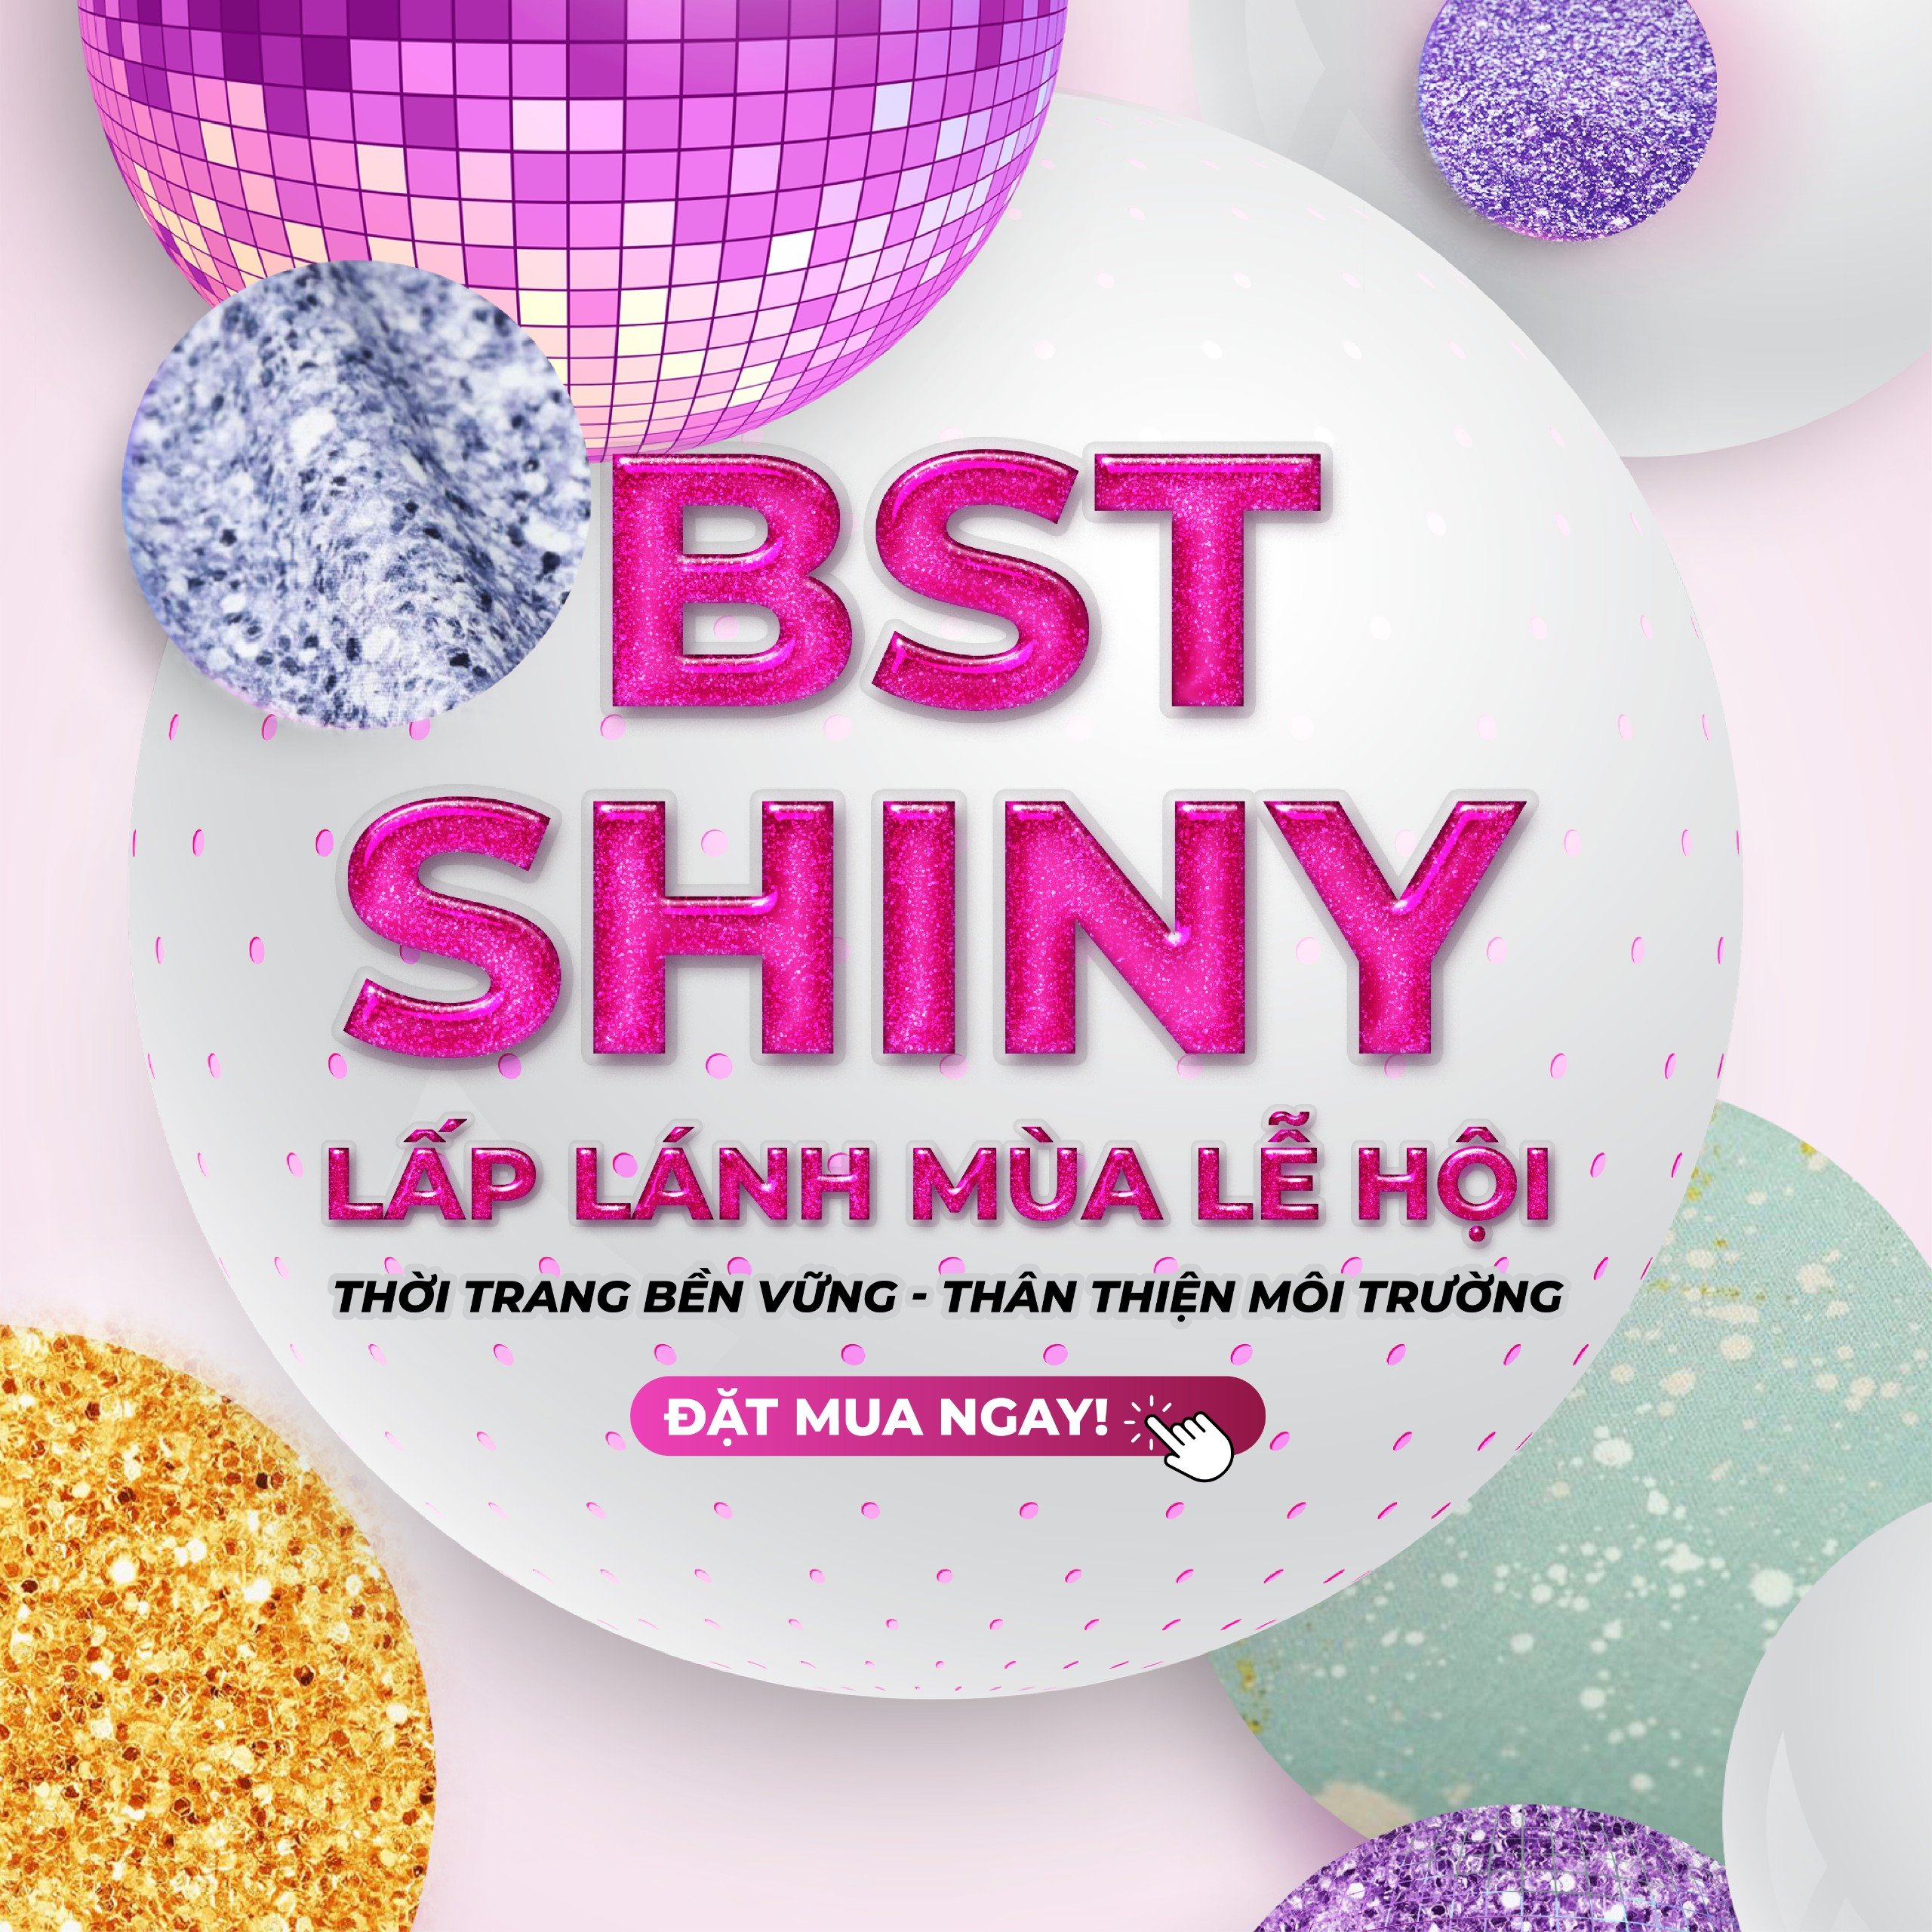 BST Shiny – Lấp lánh mùa lễ hội